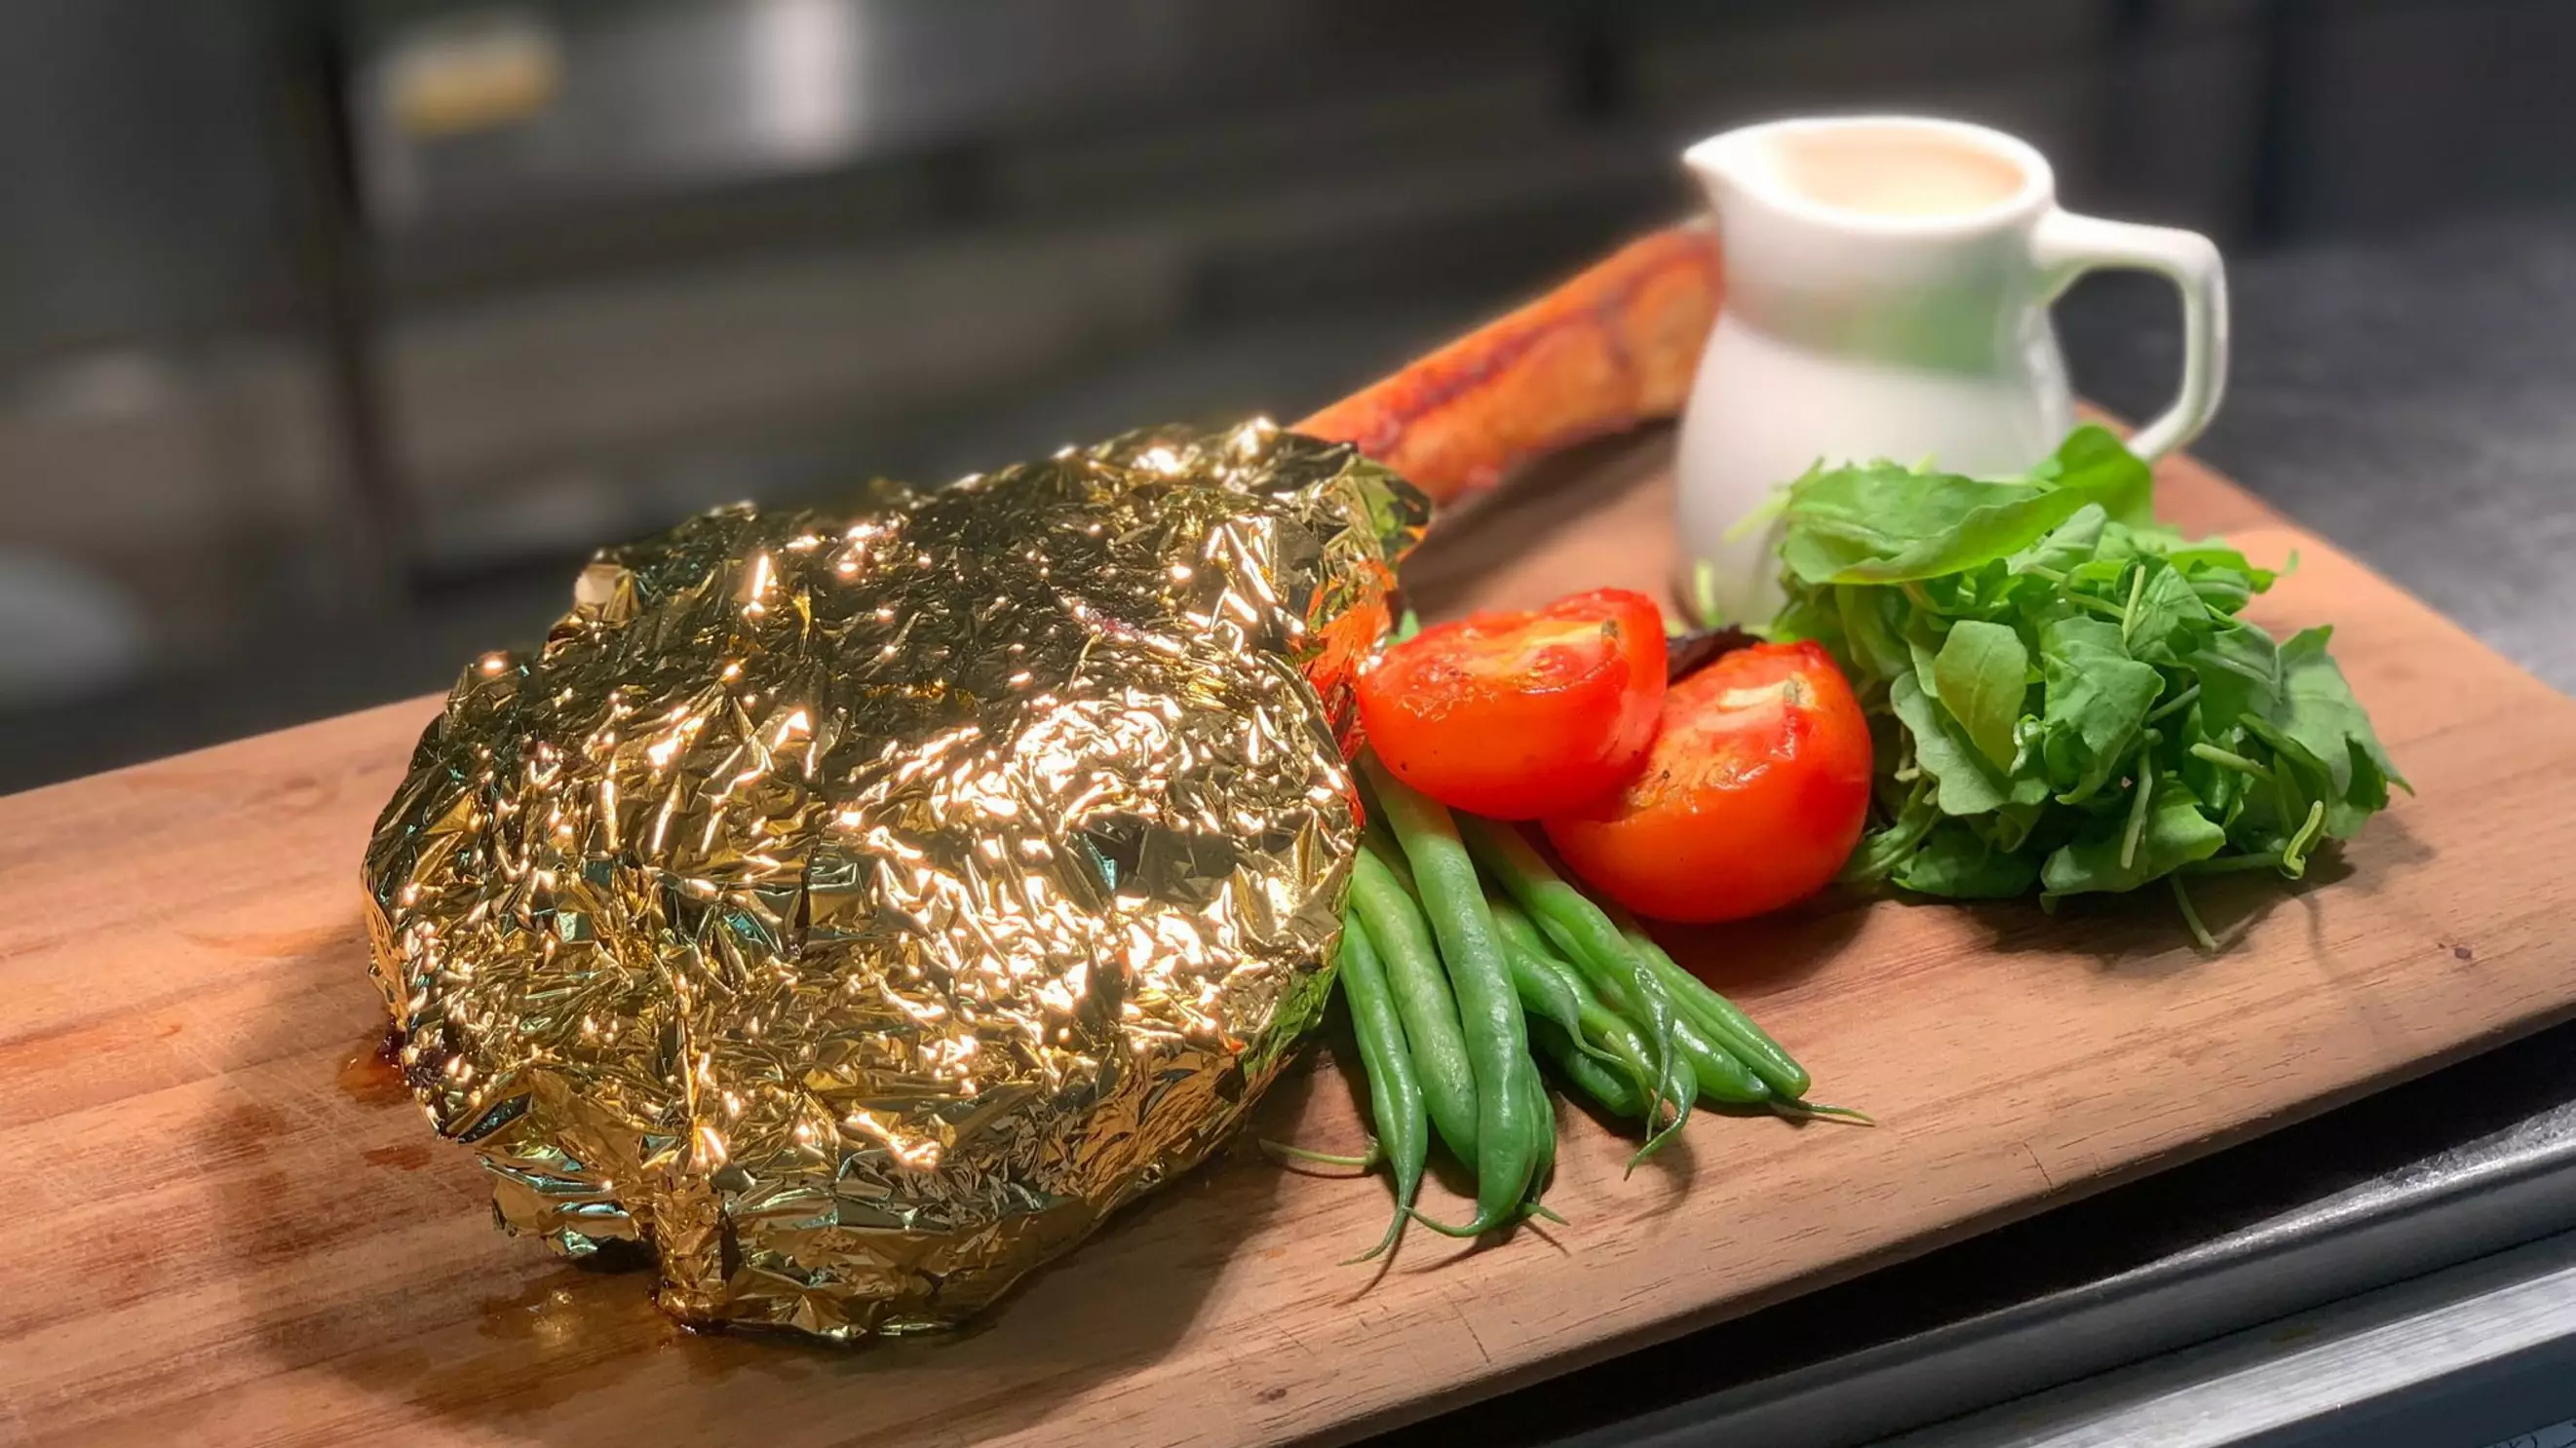 Restaurant Rivals Salt Bae With Golden Steaks That Are £500 Cheaper